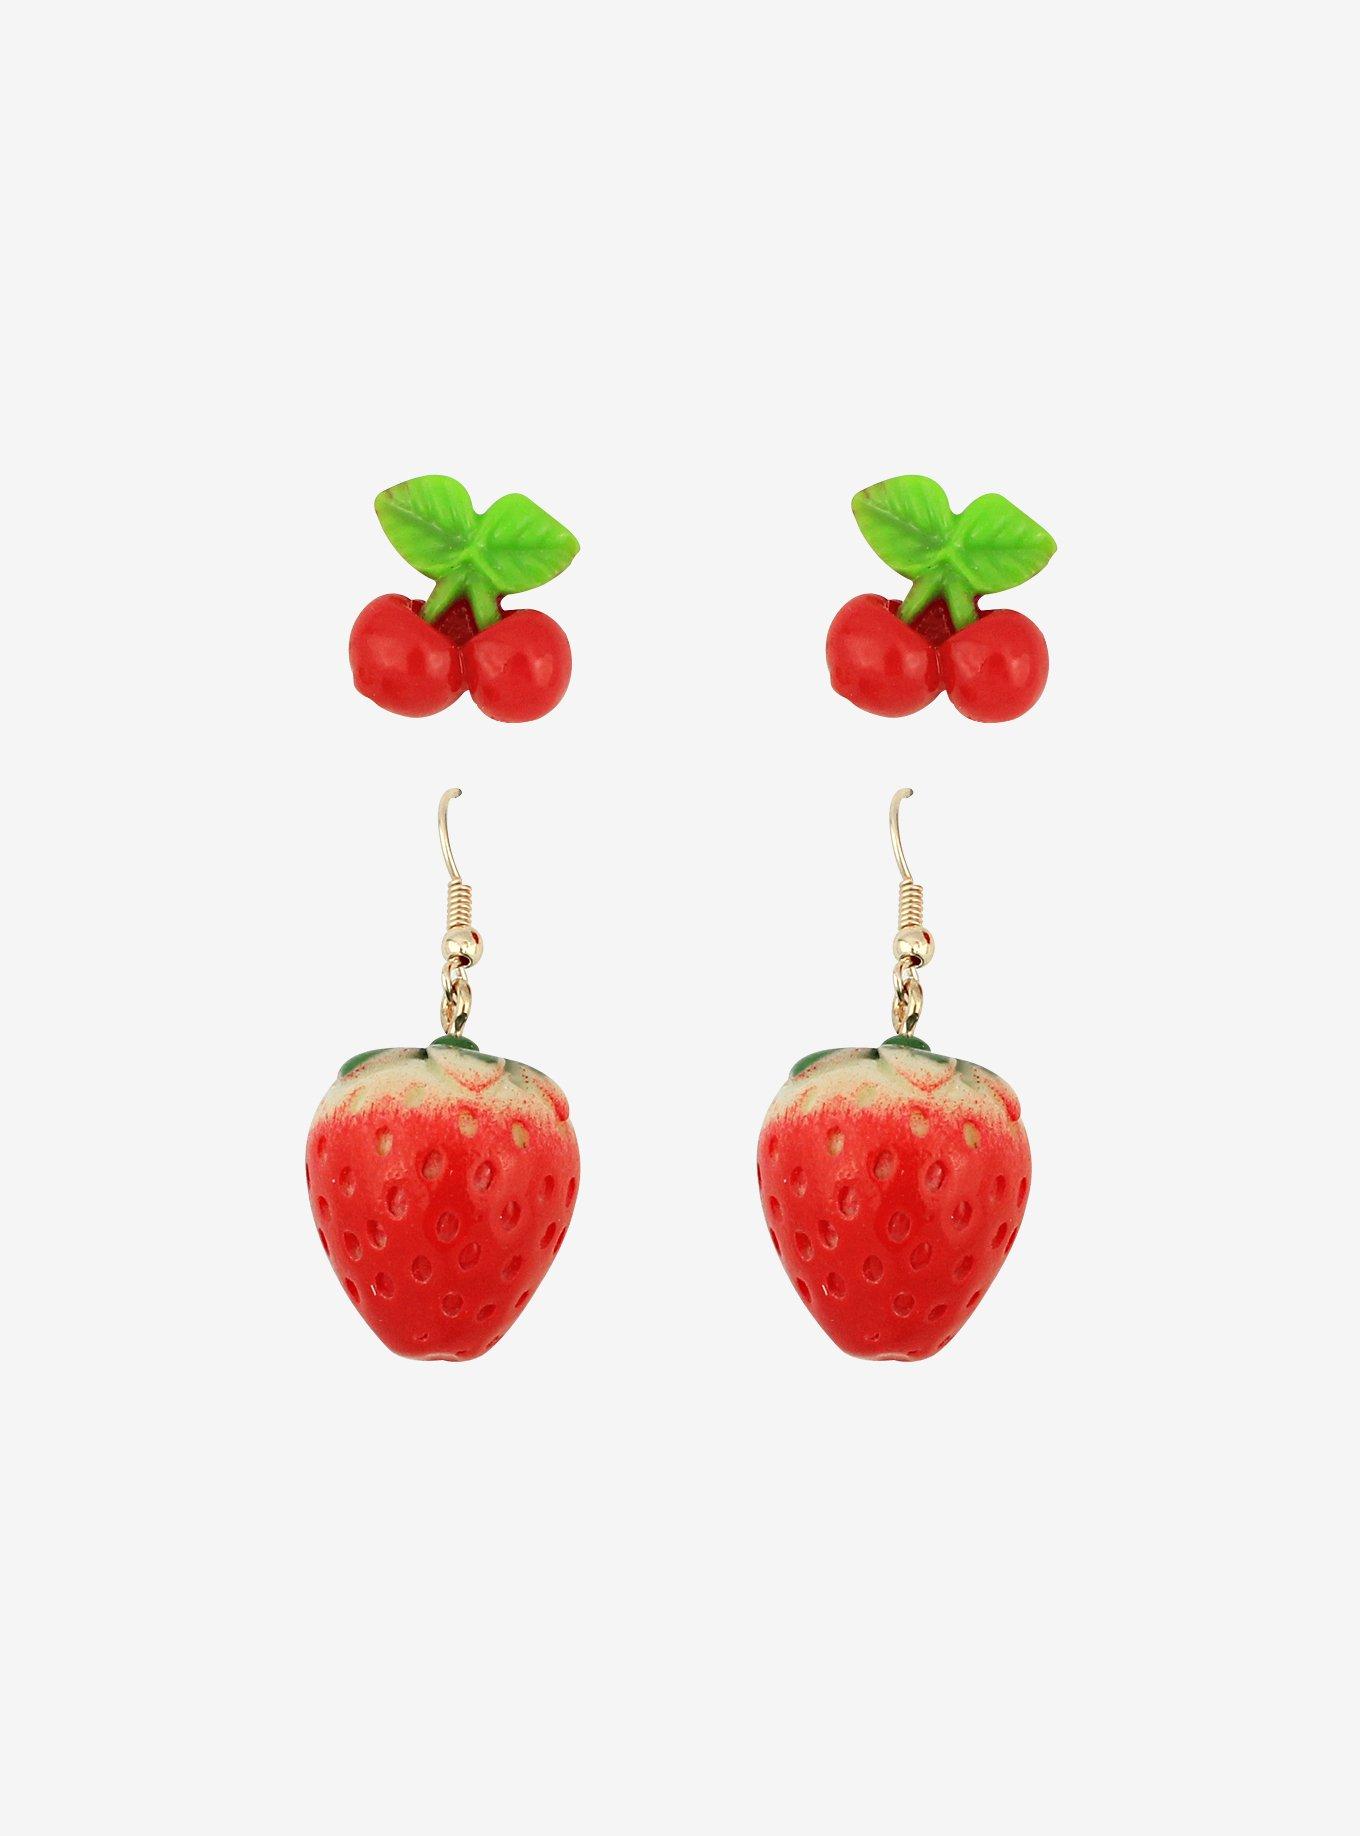 Cherry & Strawberry Earring Set, , hi-res